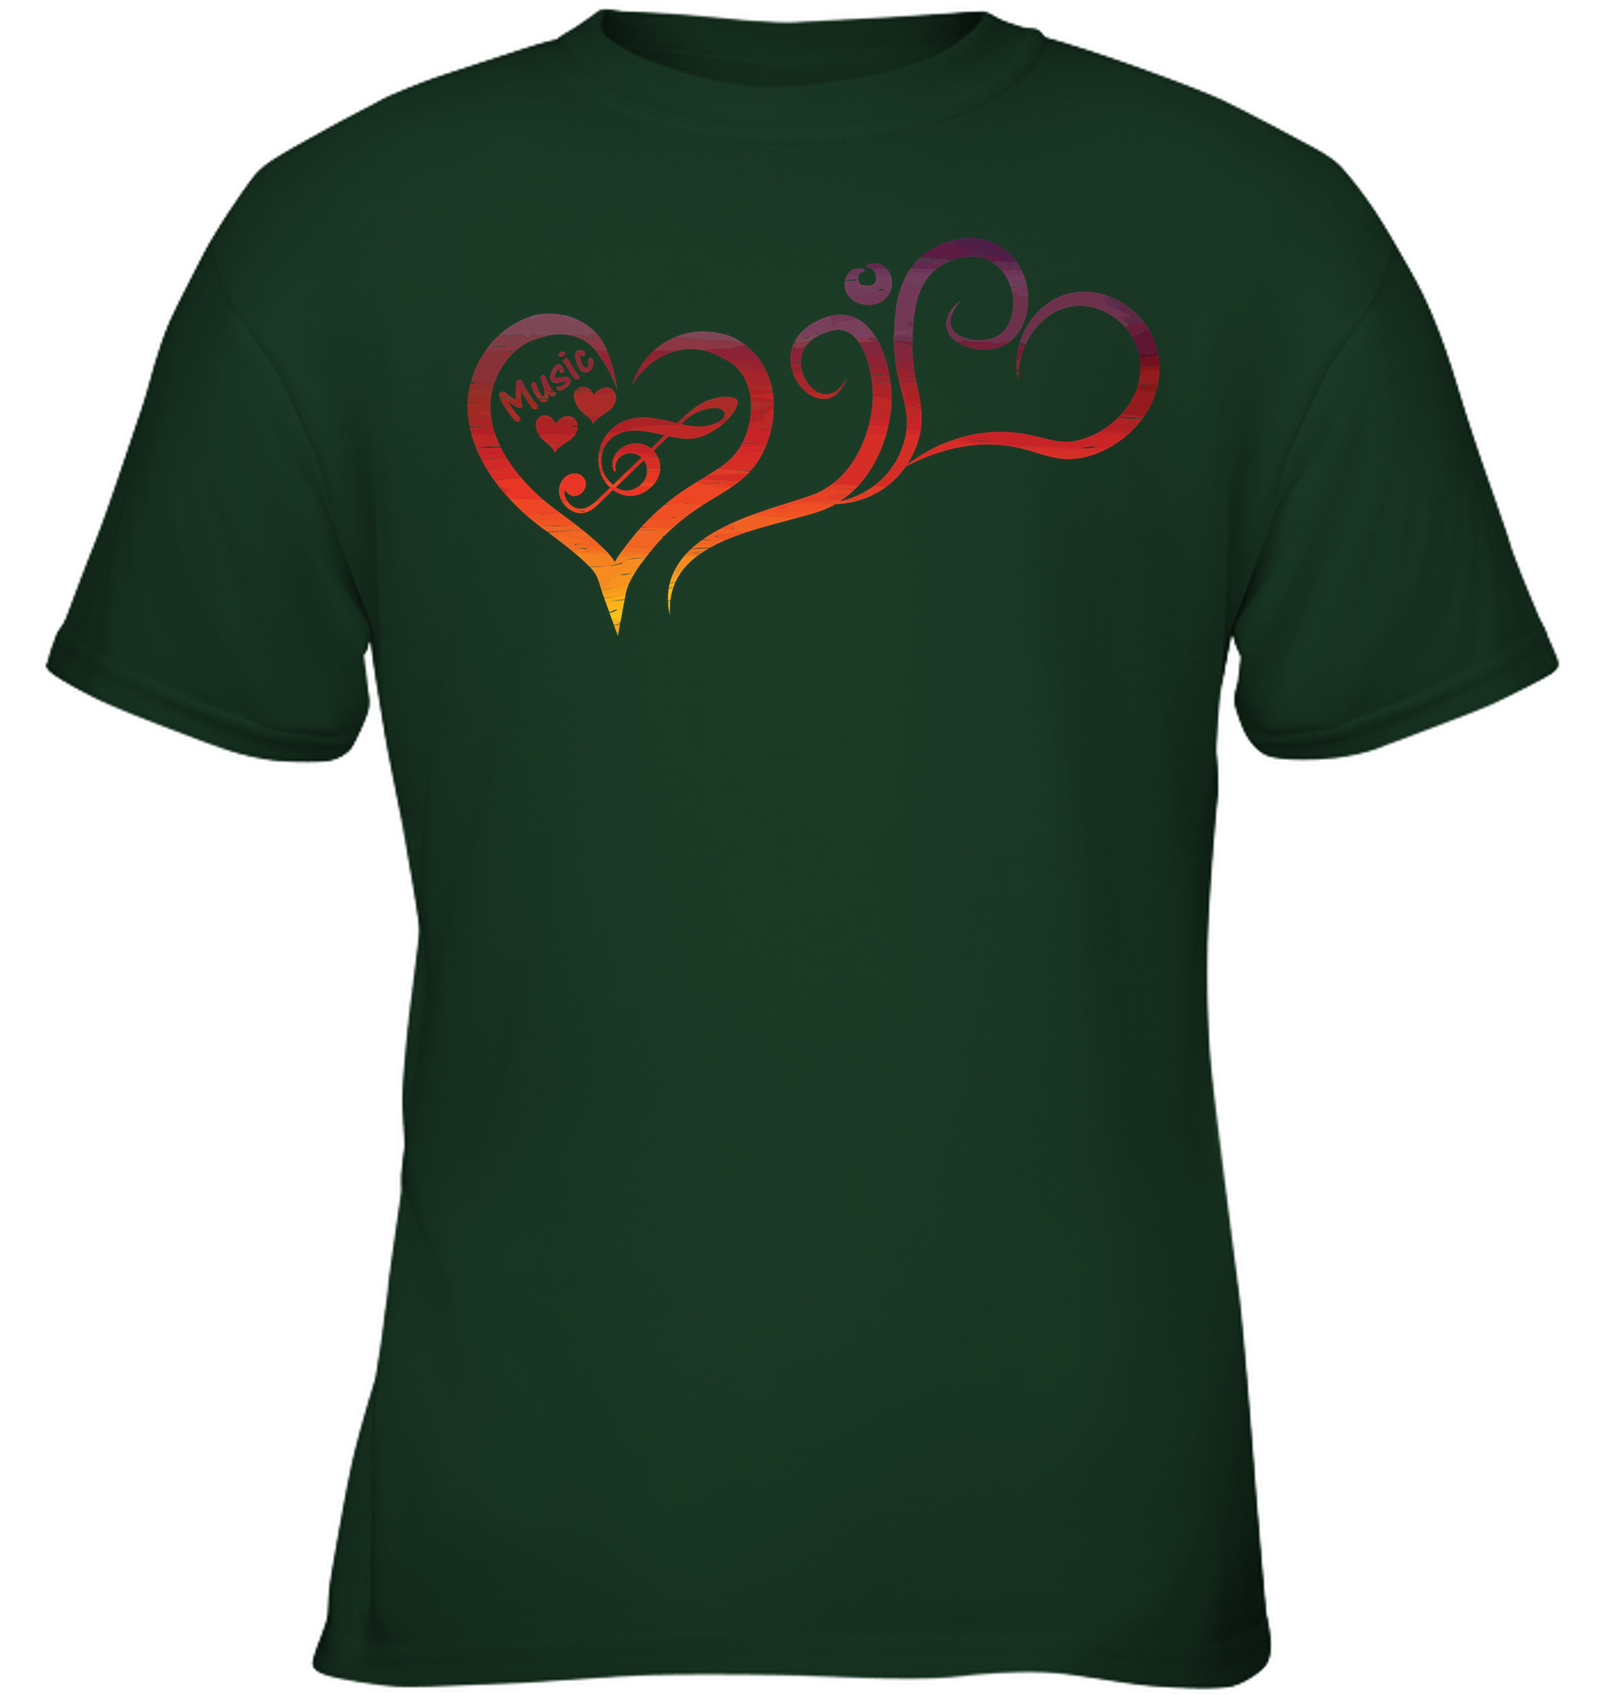 Hearts Music Fun - Gildan Youth Short Sleeve T-Shirt